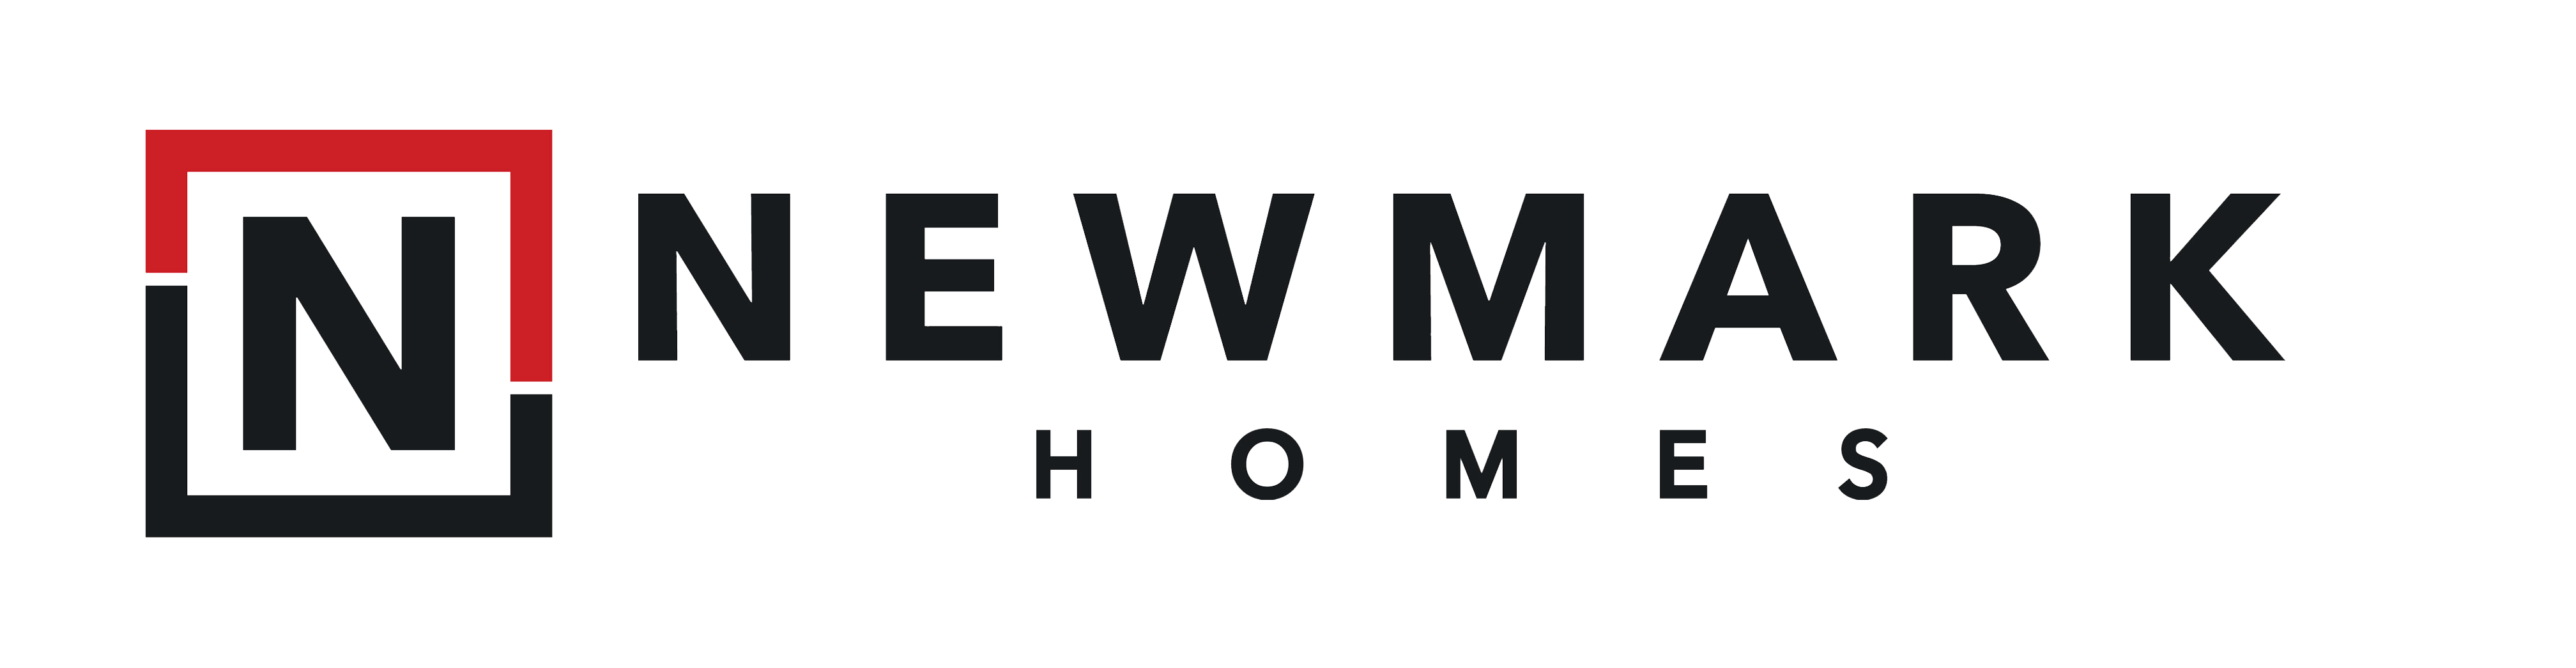 Newmark Homes Houston logo